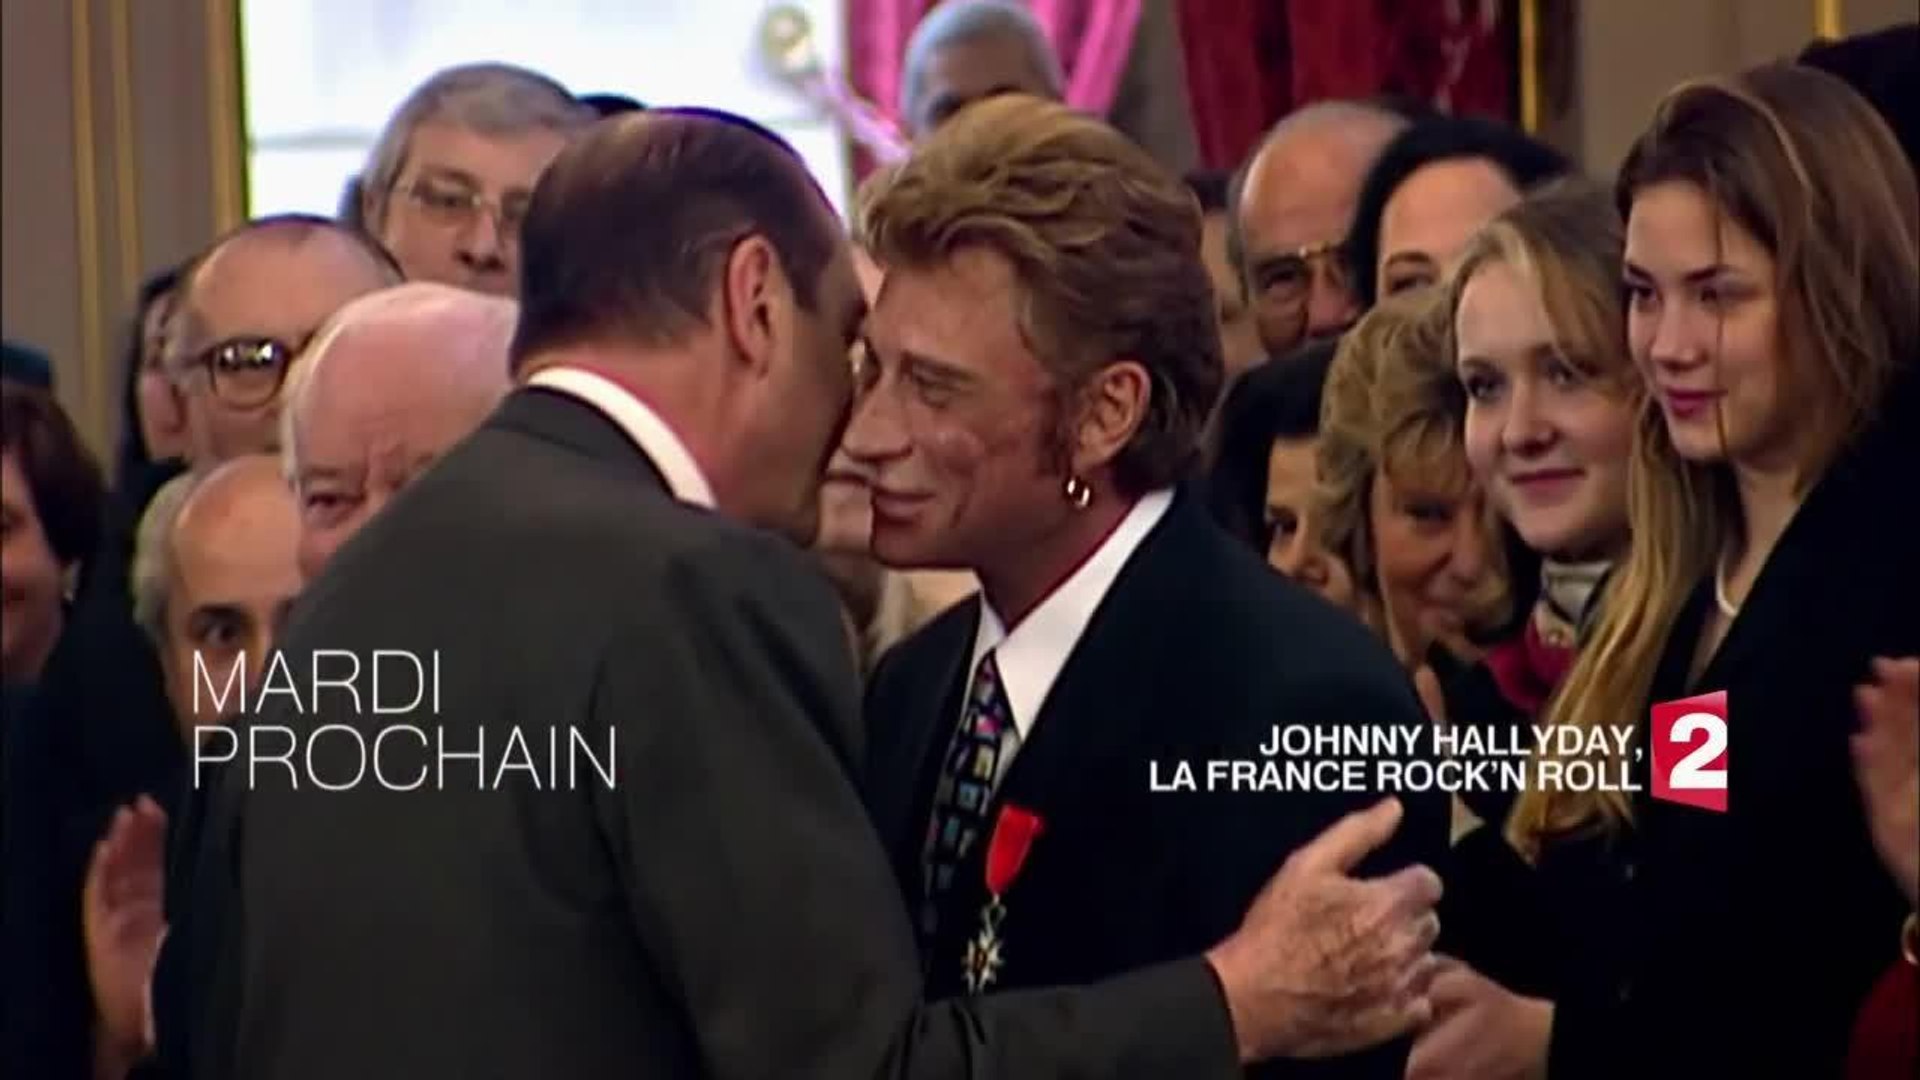 Johnny Hallyday, la France Rock'n'roll - 12 décembre - Vidéo Dailymotion